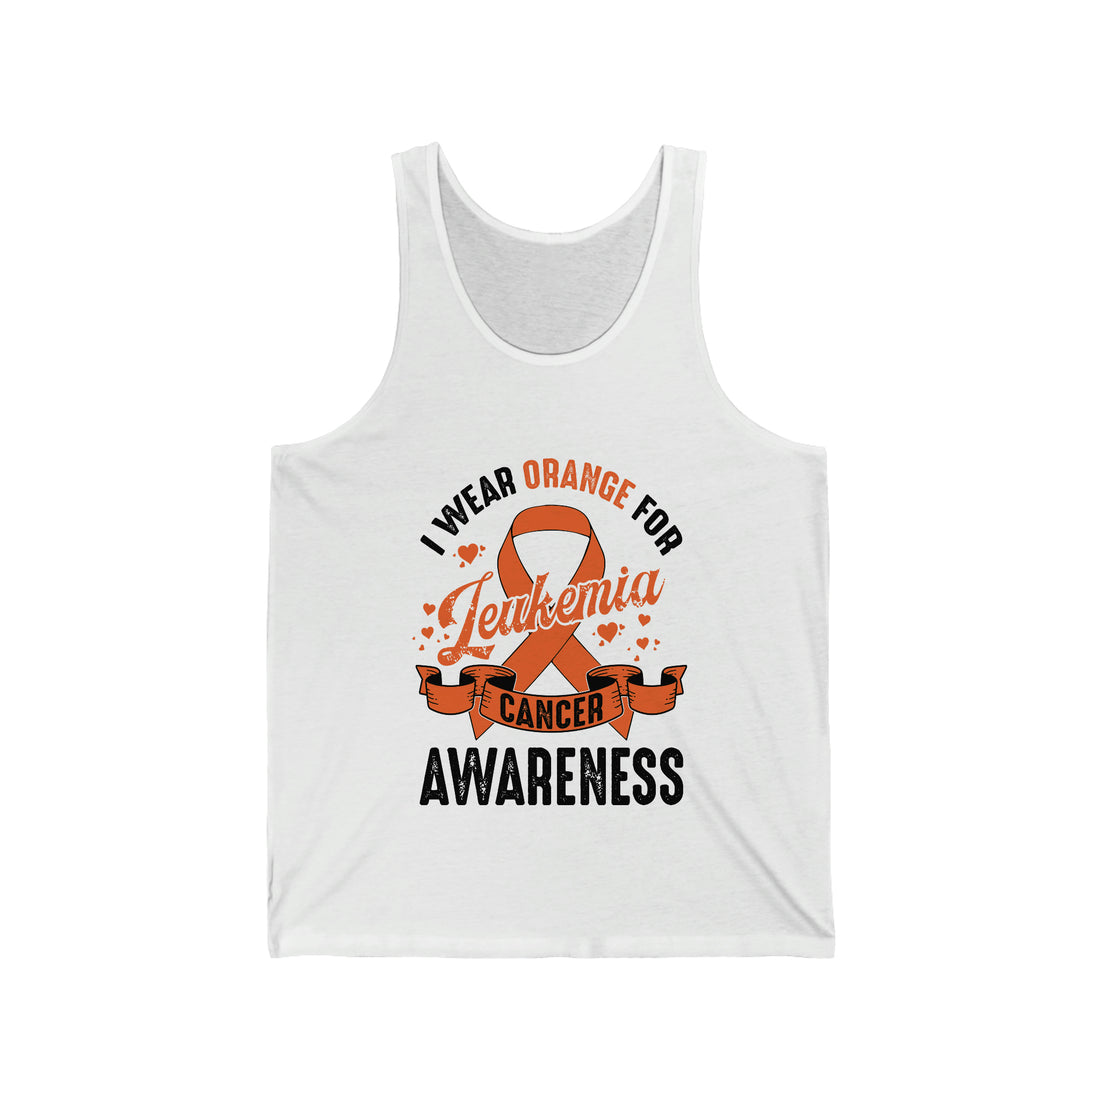 I Wear Orange For Leukemia Cancer Awareness - Unisex Jersey Tank Top